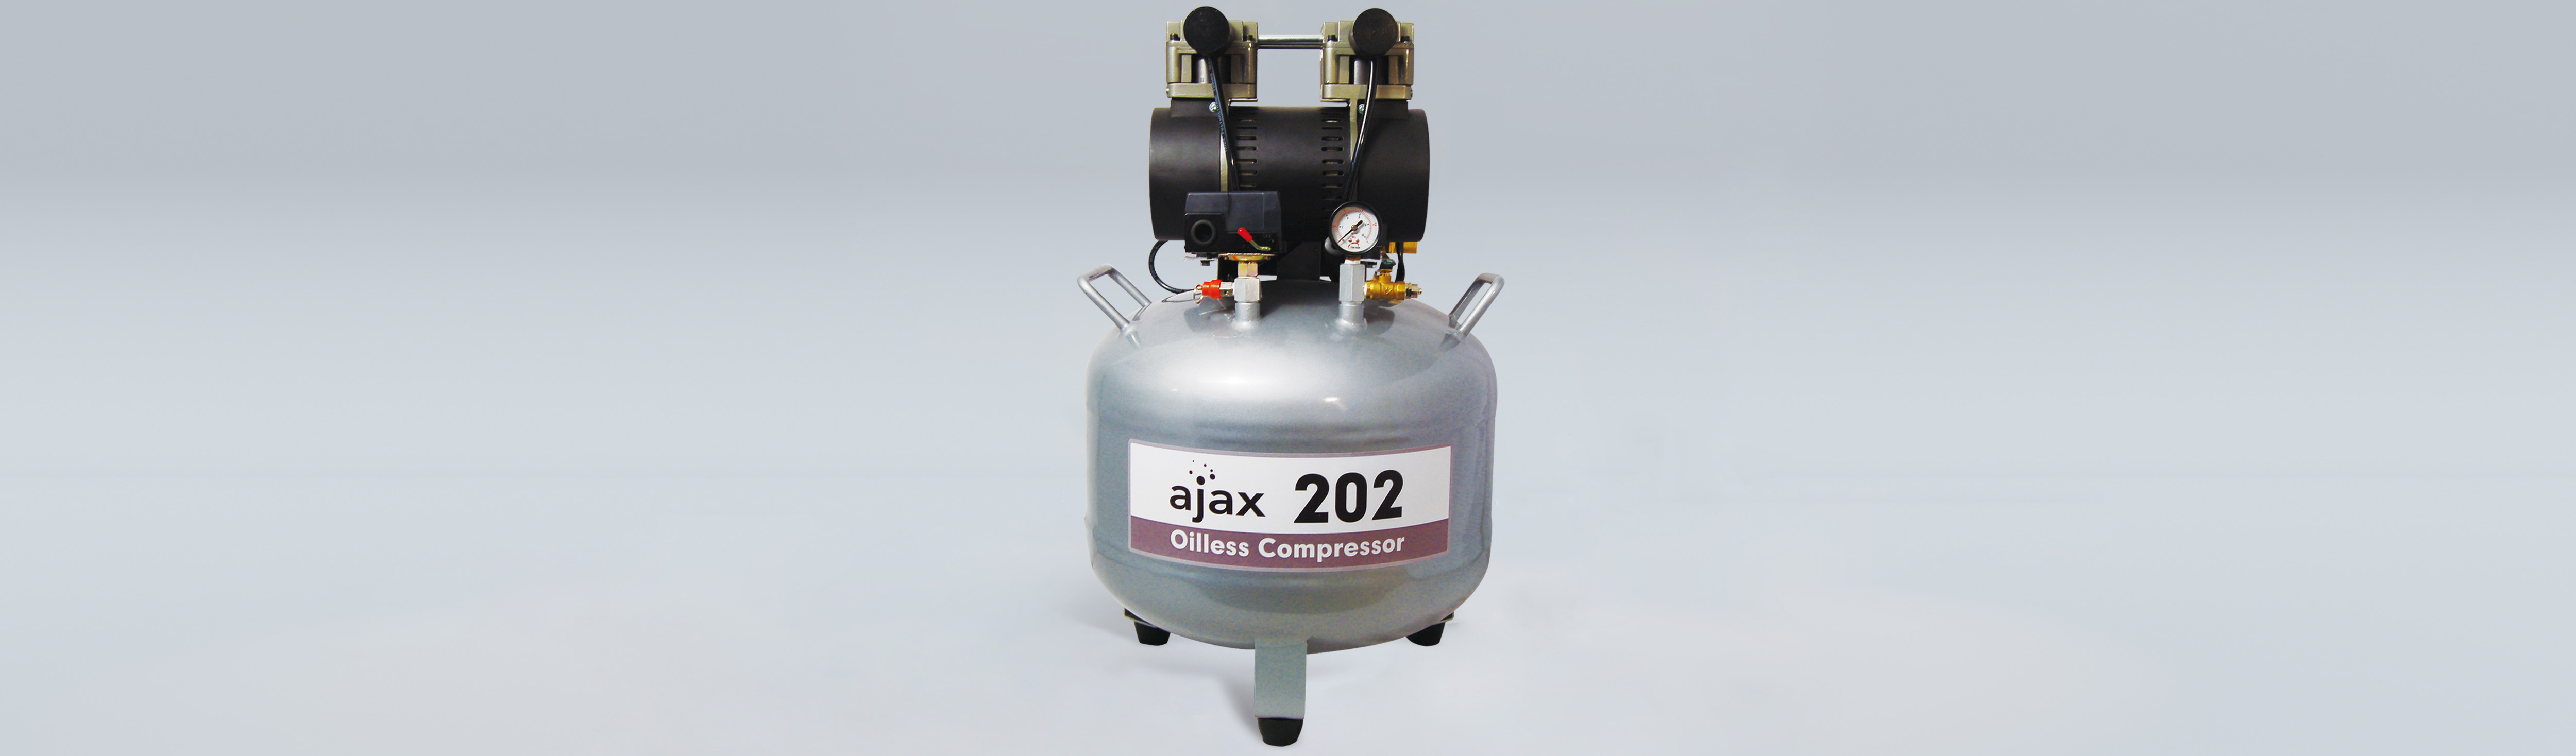 AJAX 202 компрессор